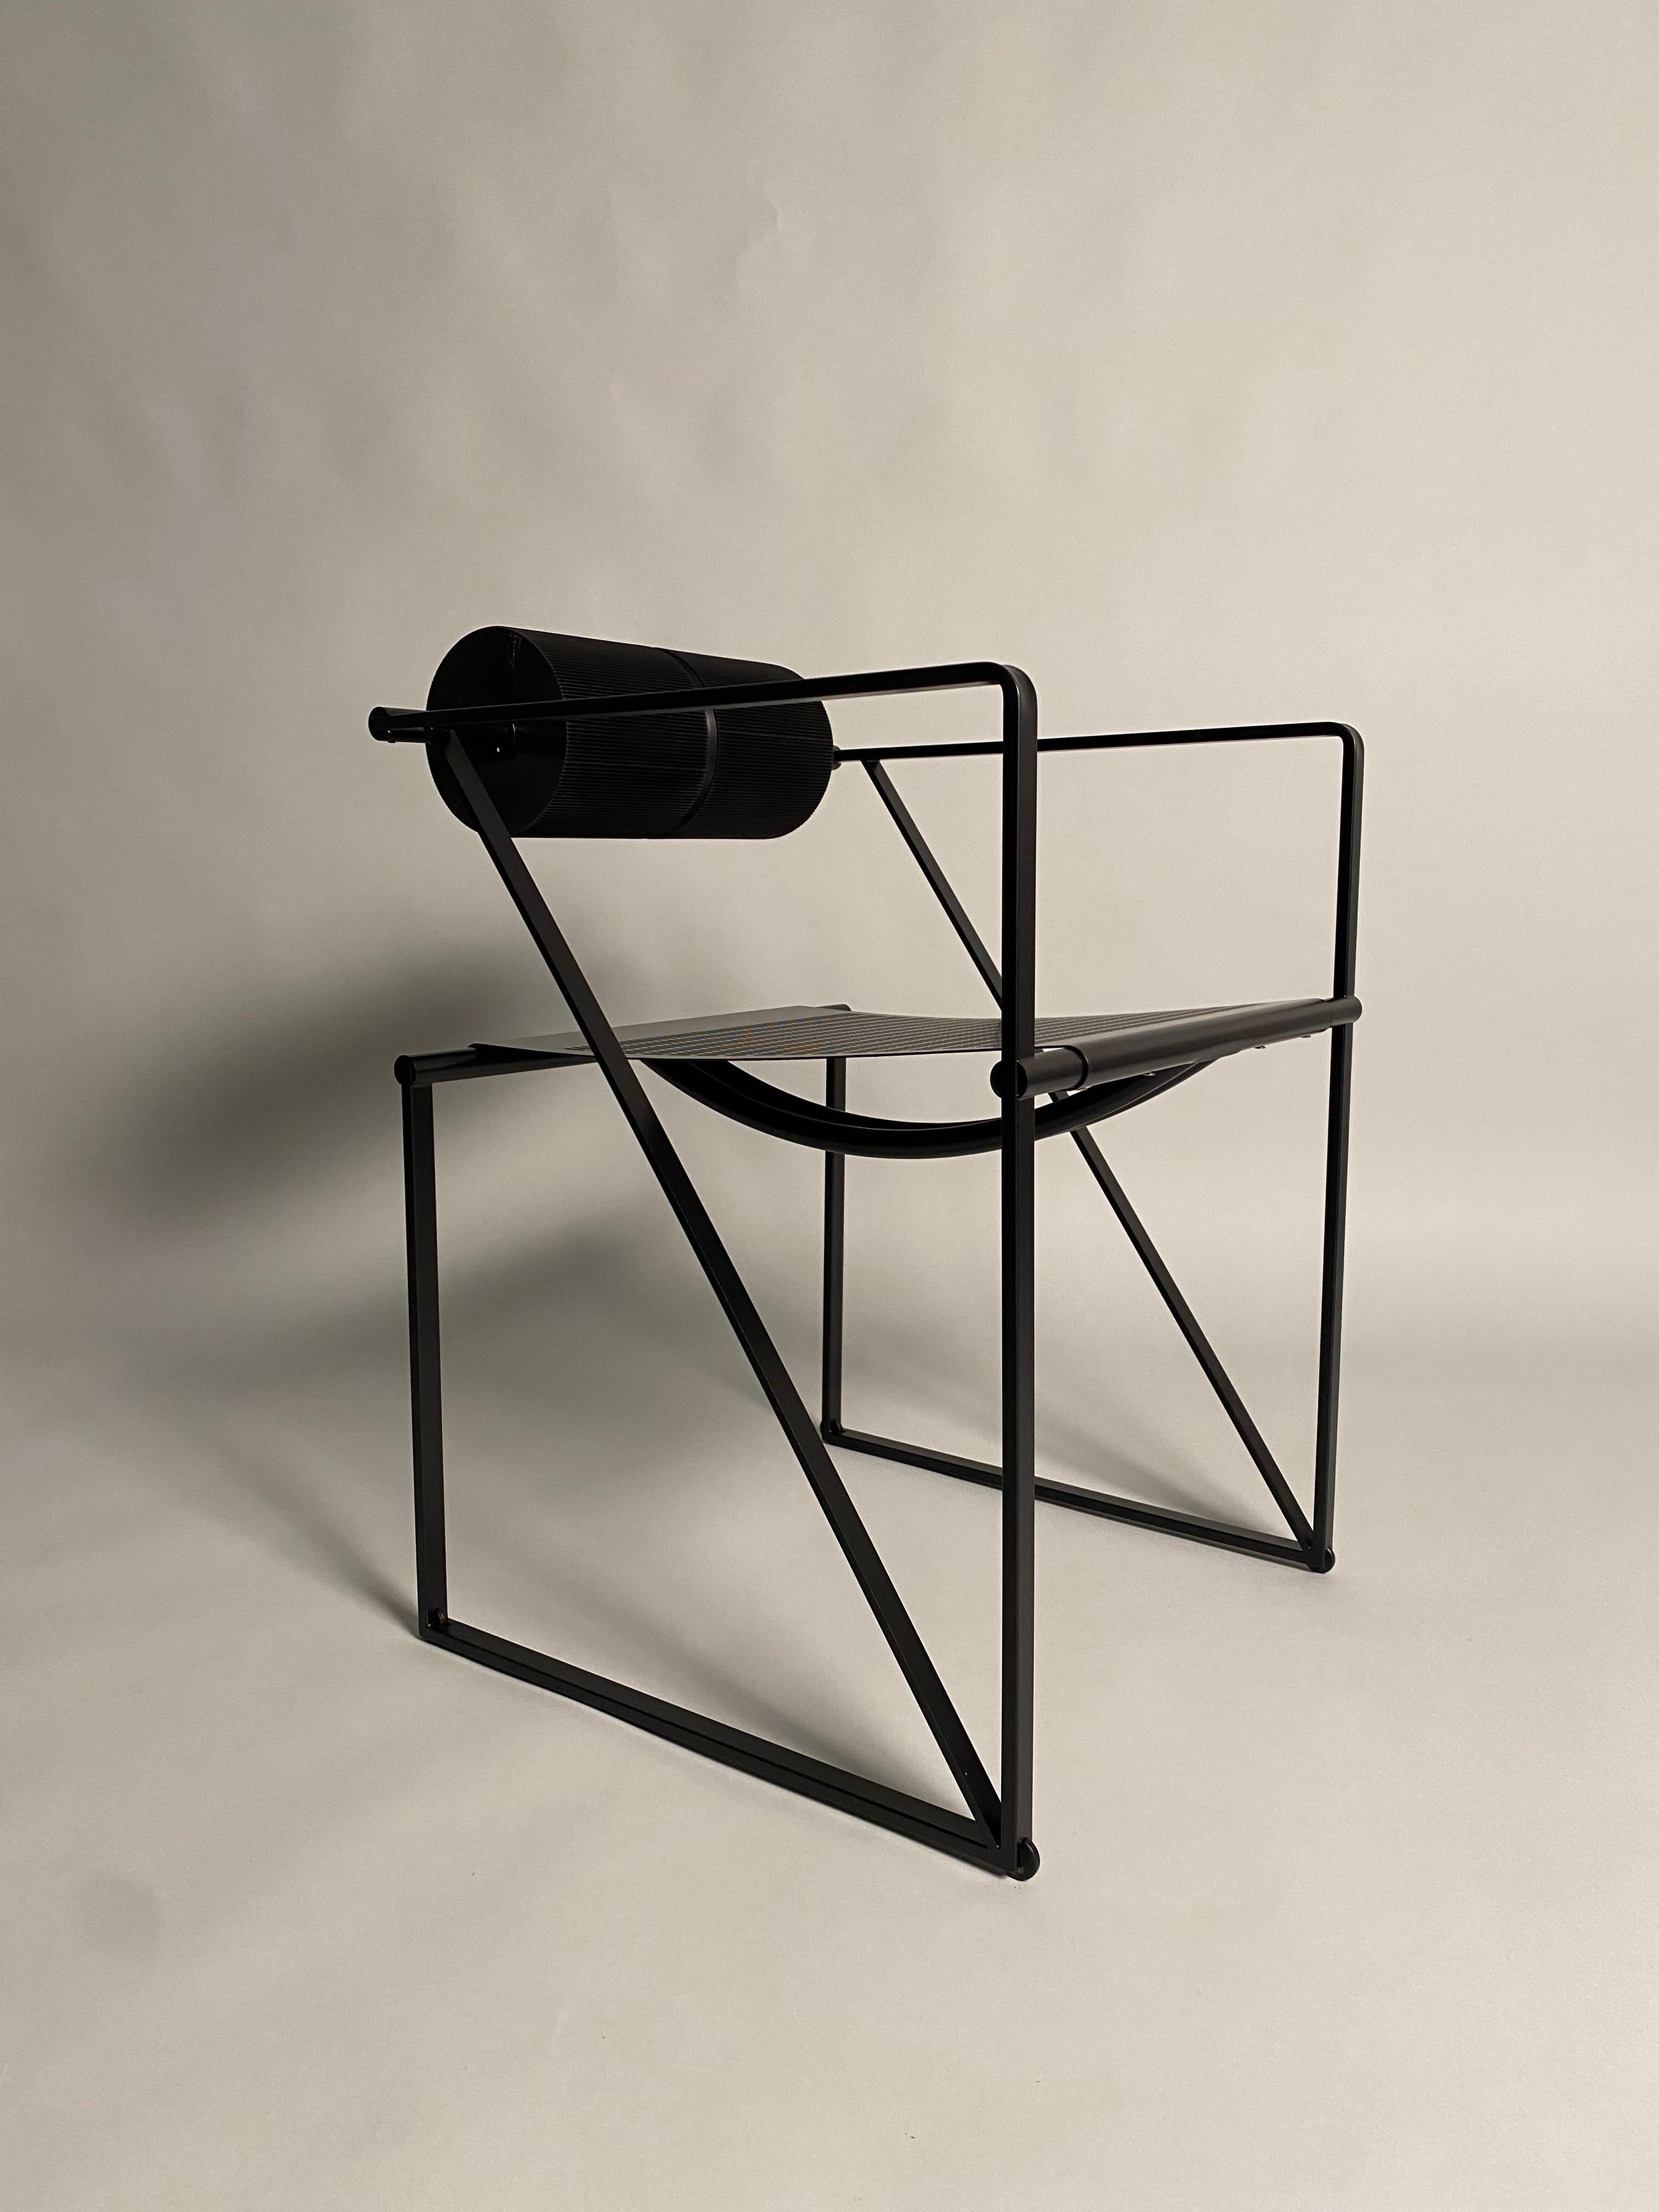 Italian Mario Botta, 'Seconda' Black Metal Chairs, Alias Mod. 602, 1980s For Sale